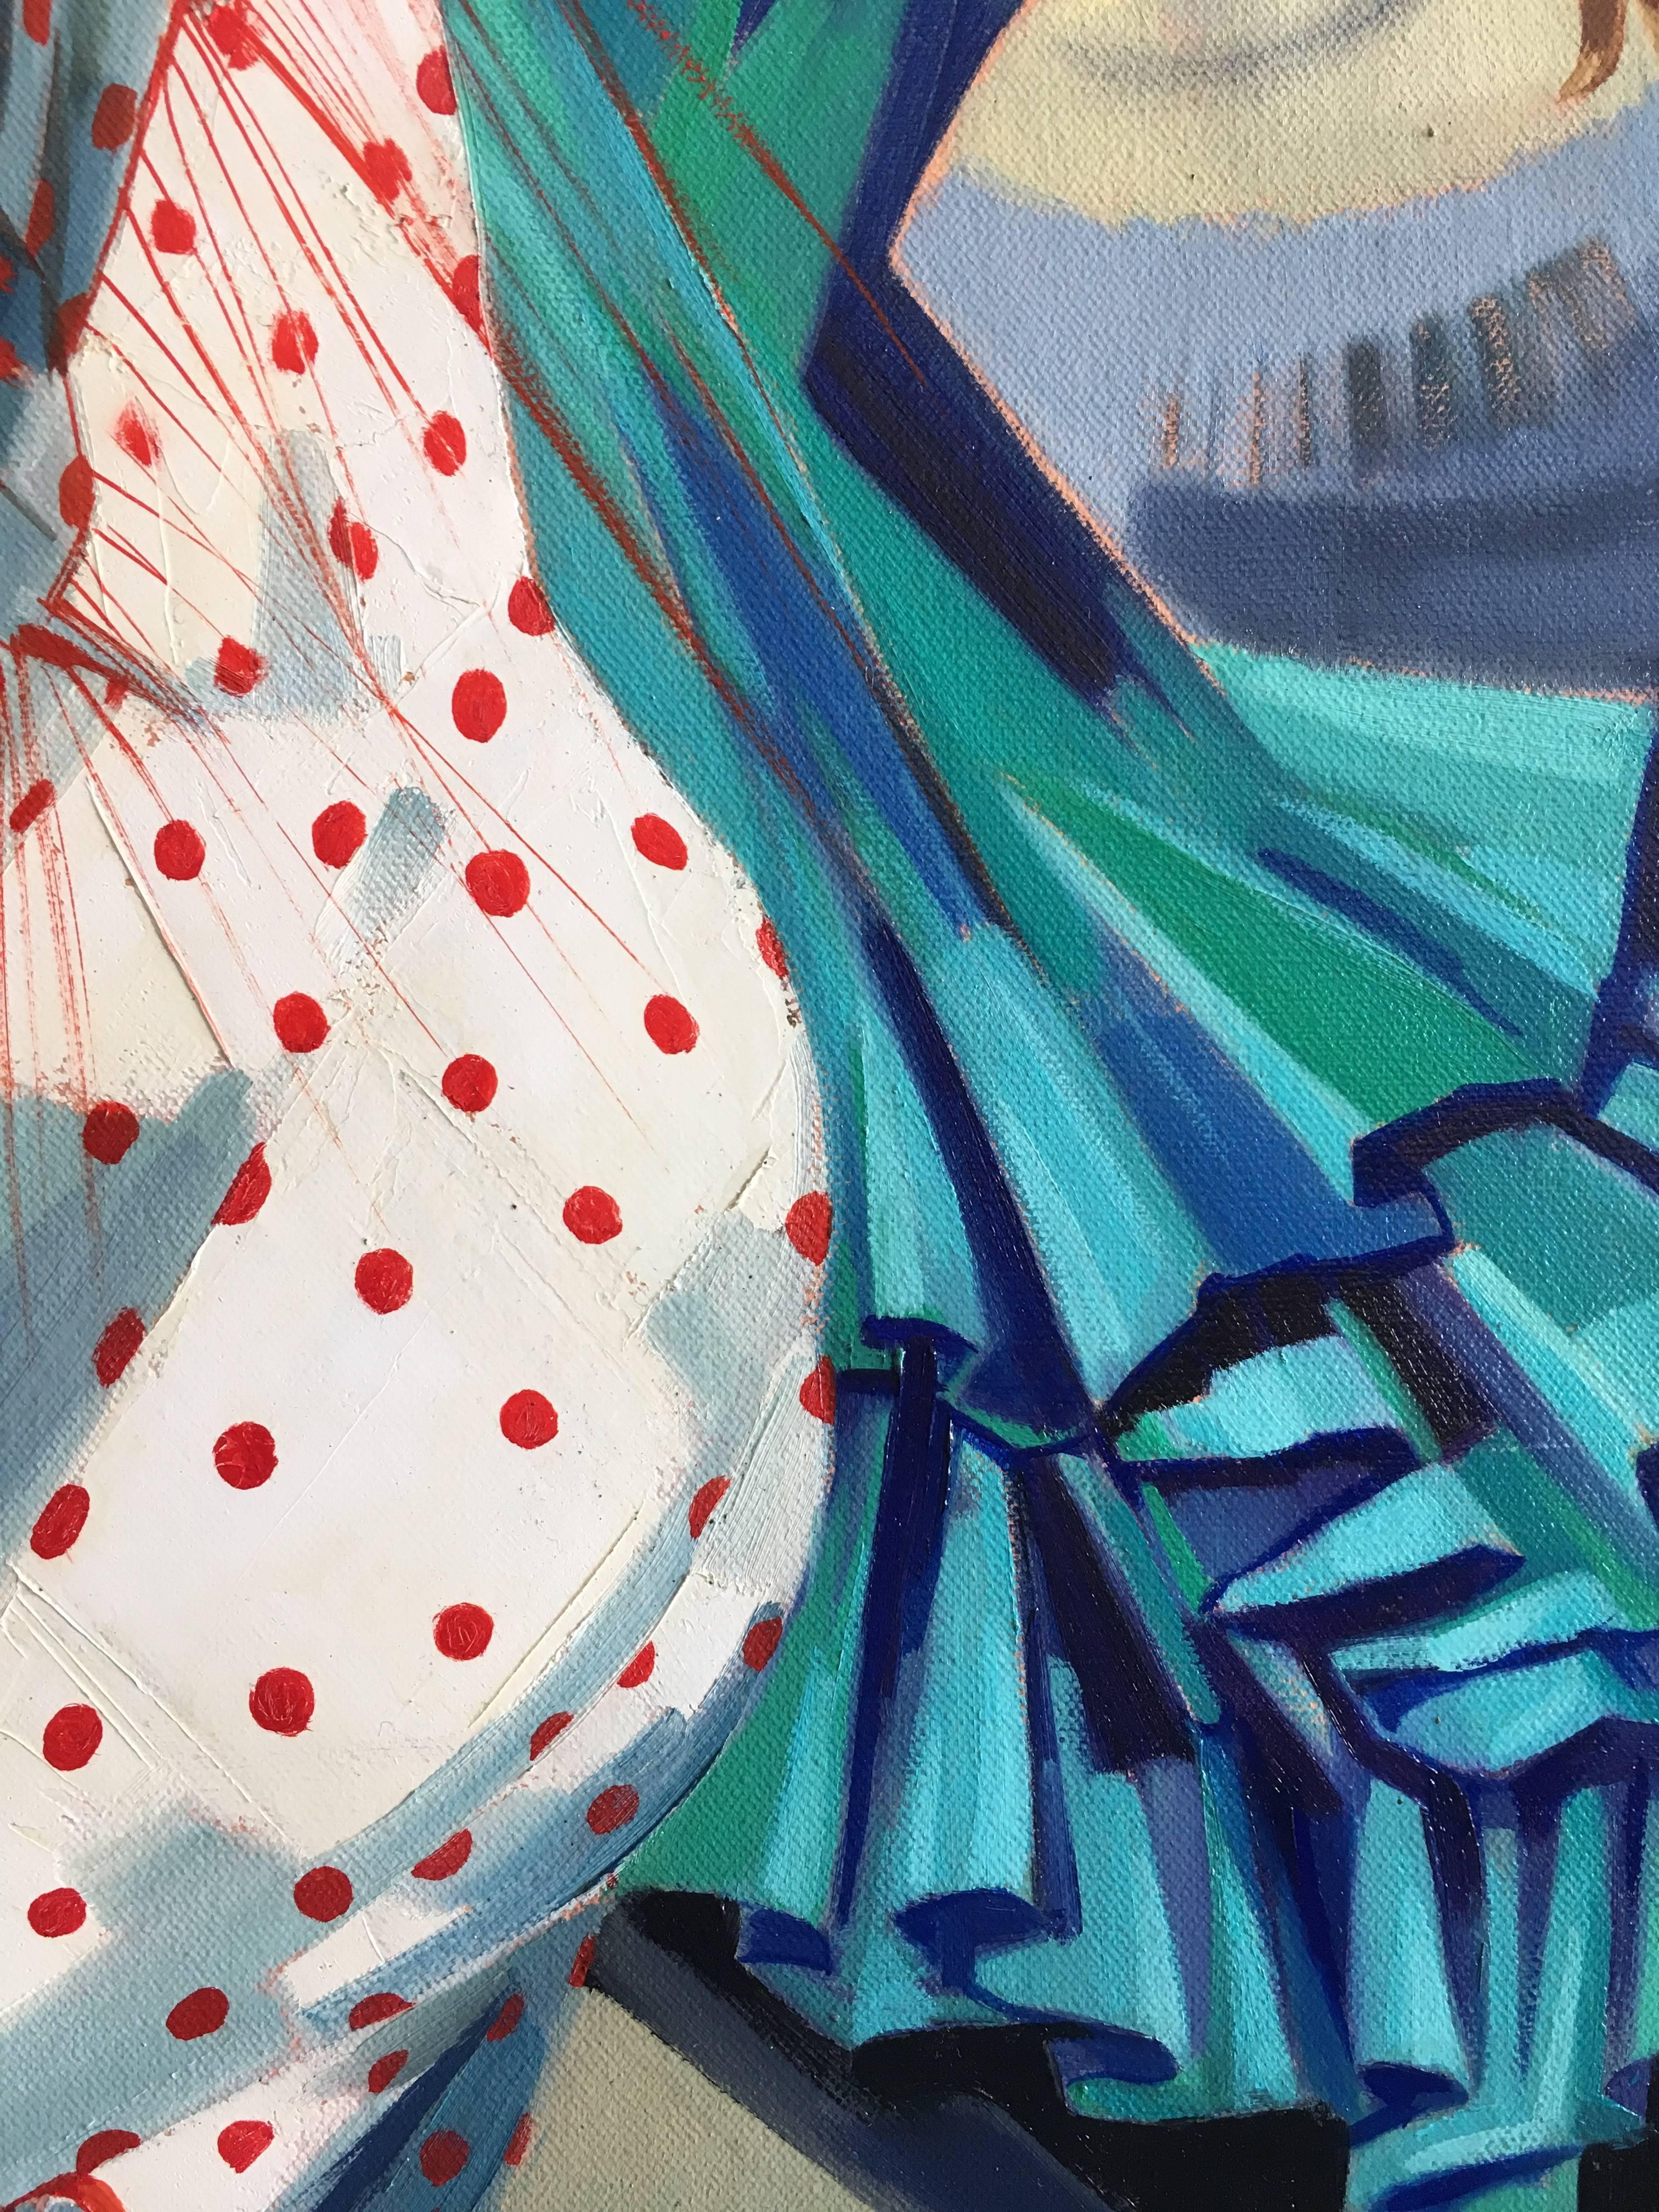 Bulerias, flamenco dance, oil on canvas 5